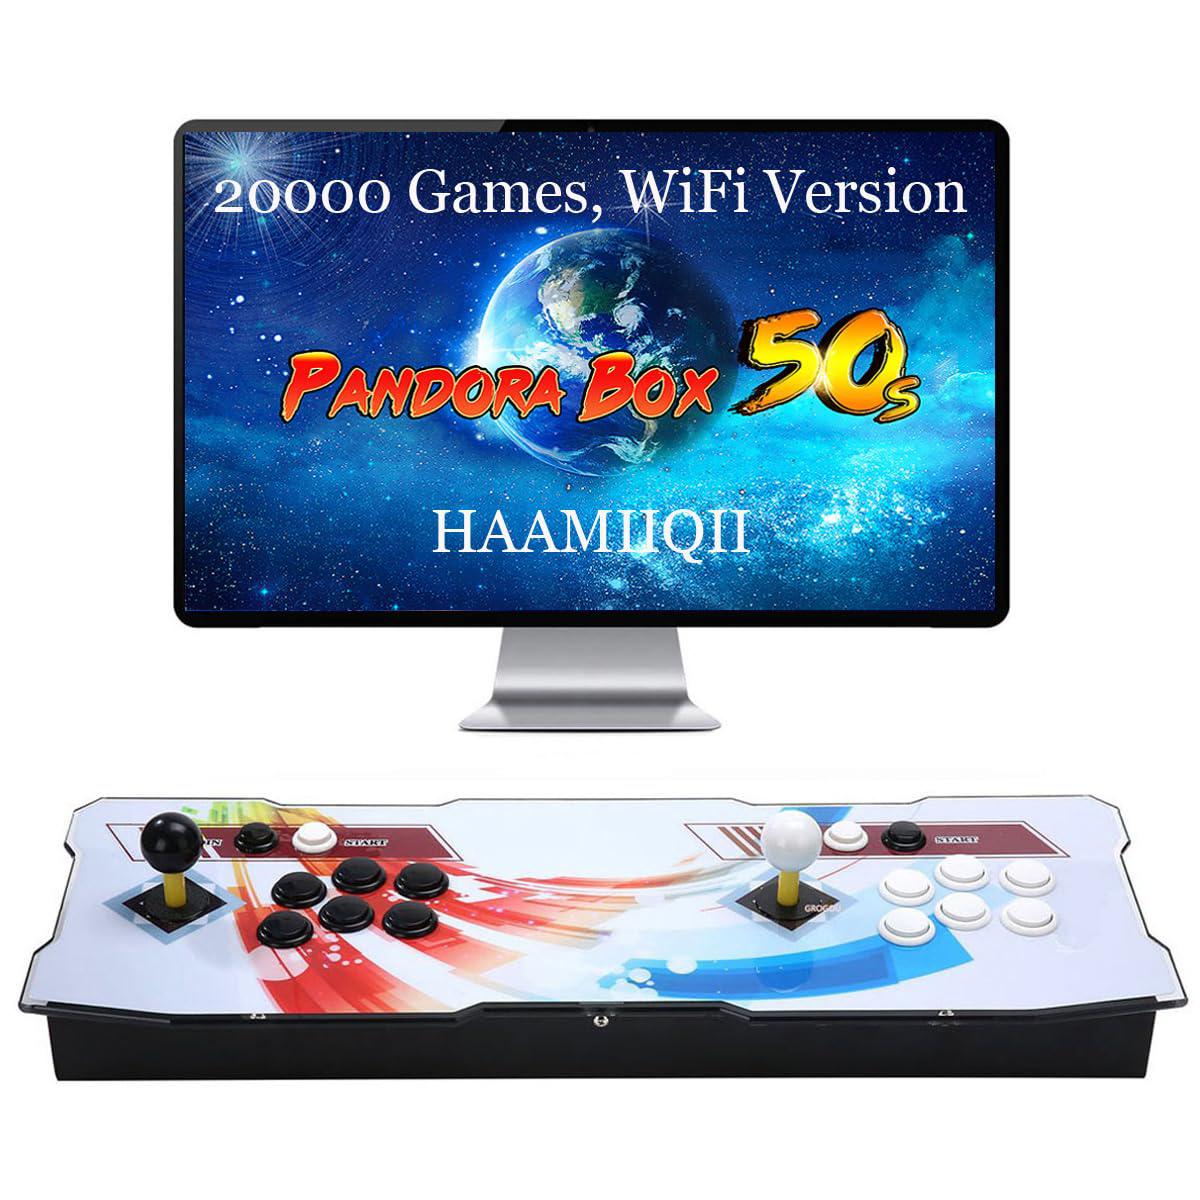 haamiiqii pandora box 50s arcade game console machine - 20000 games installed, wifi version, 1280x720p, 2d/3d games, search/s